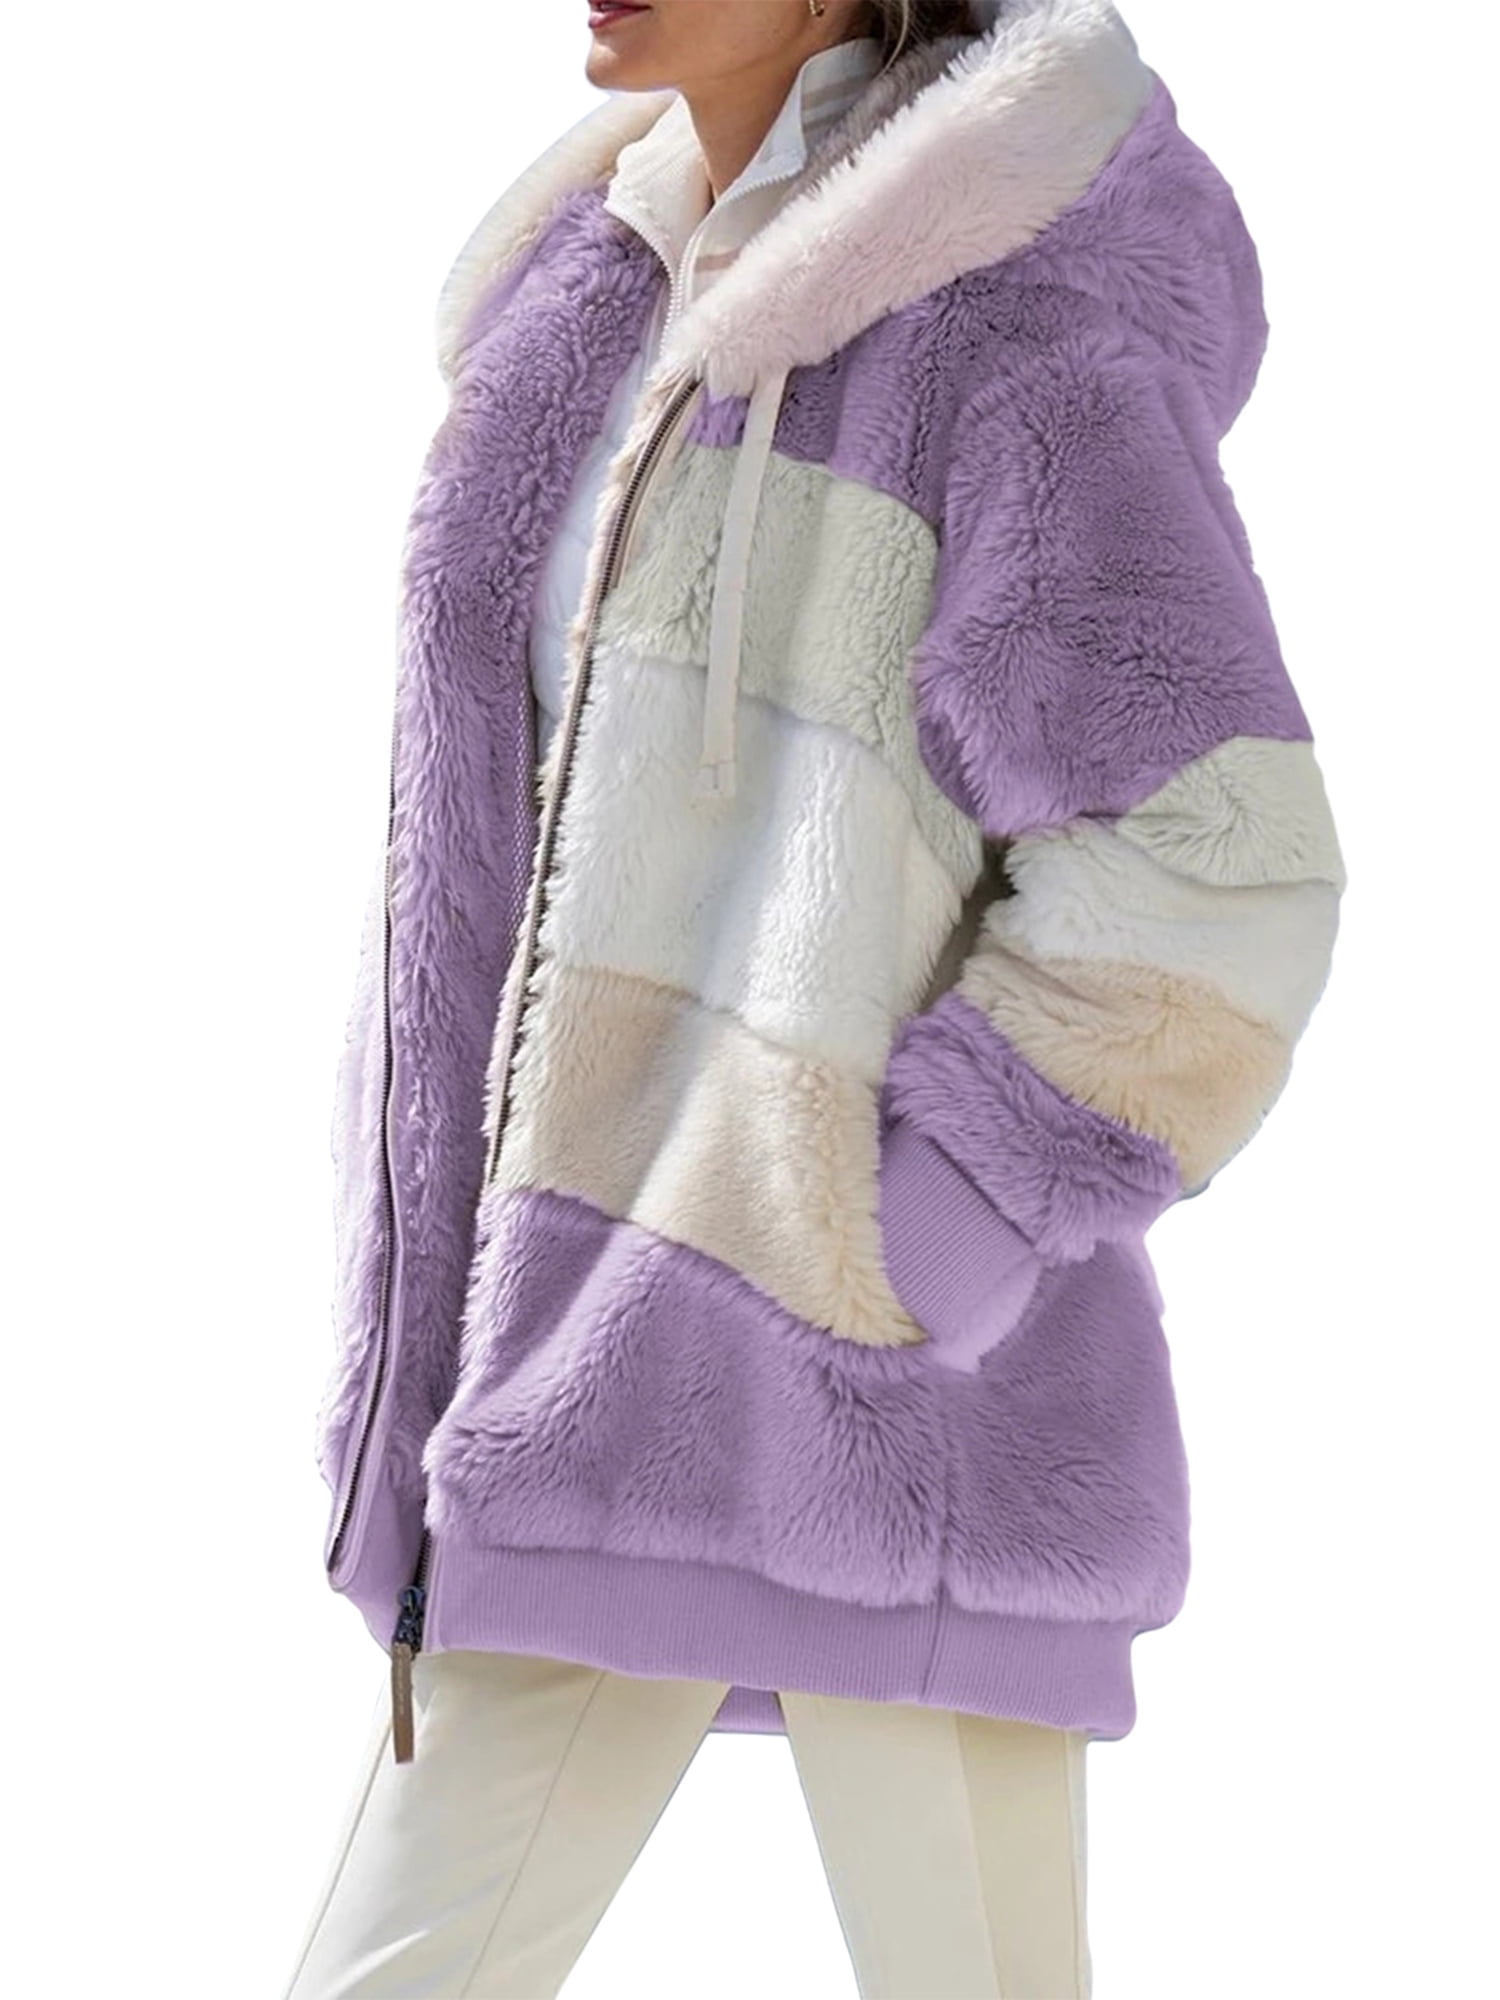 FOCUSNORM Warm Winter Hoodies for Women Faux Fur Jacket Coat Fuzzy ...